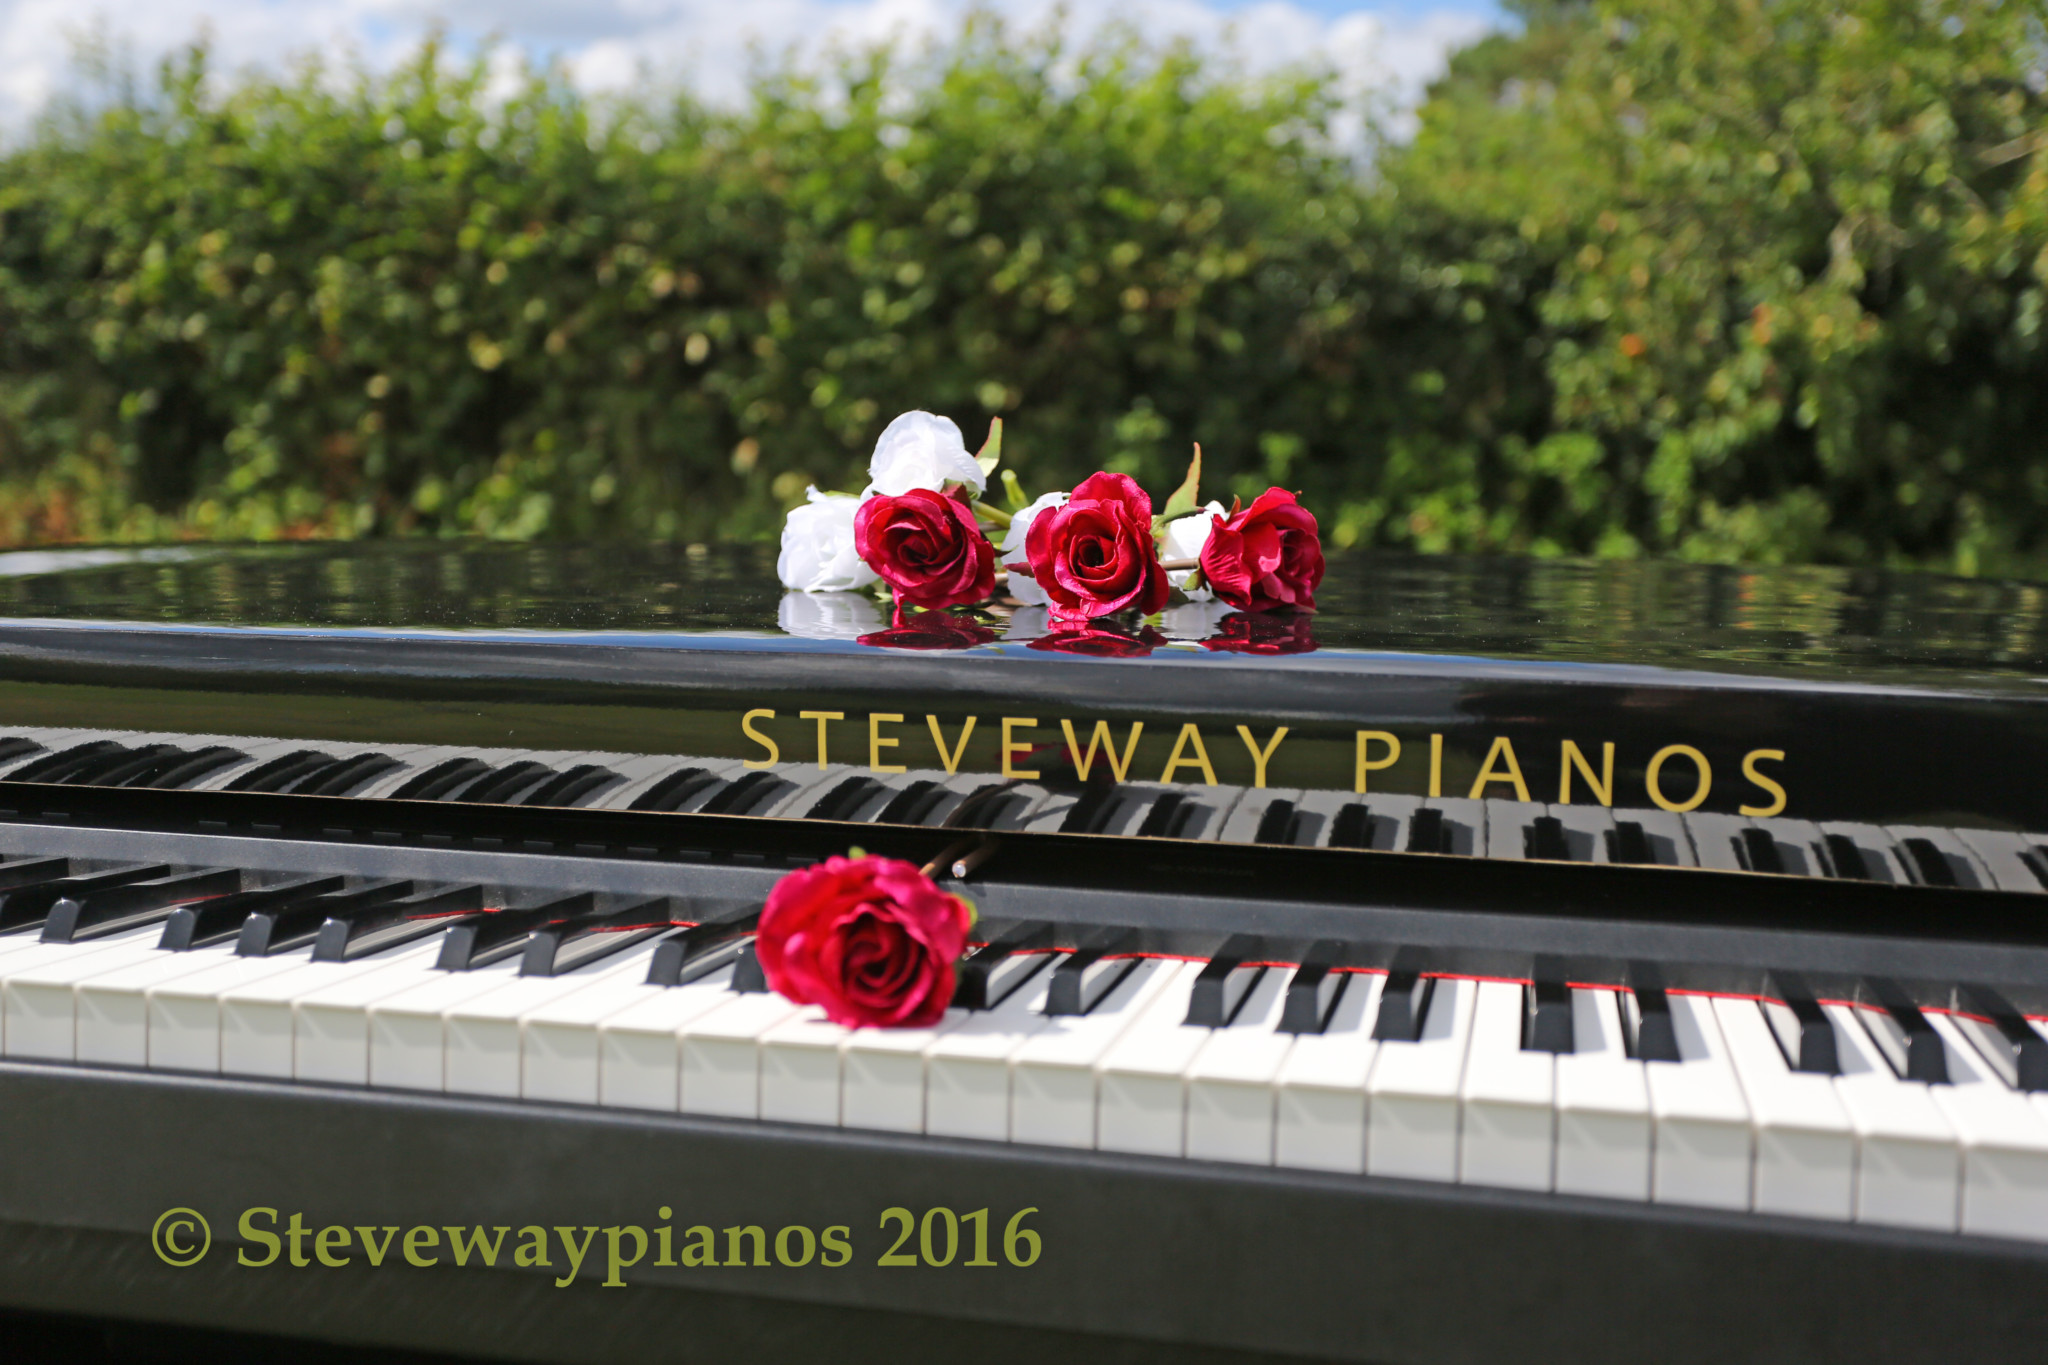 Steveway Pianos